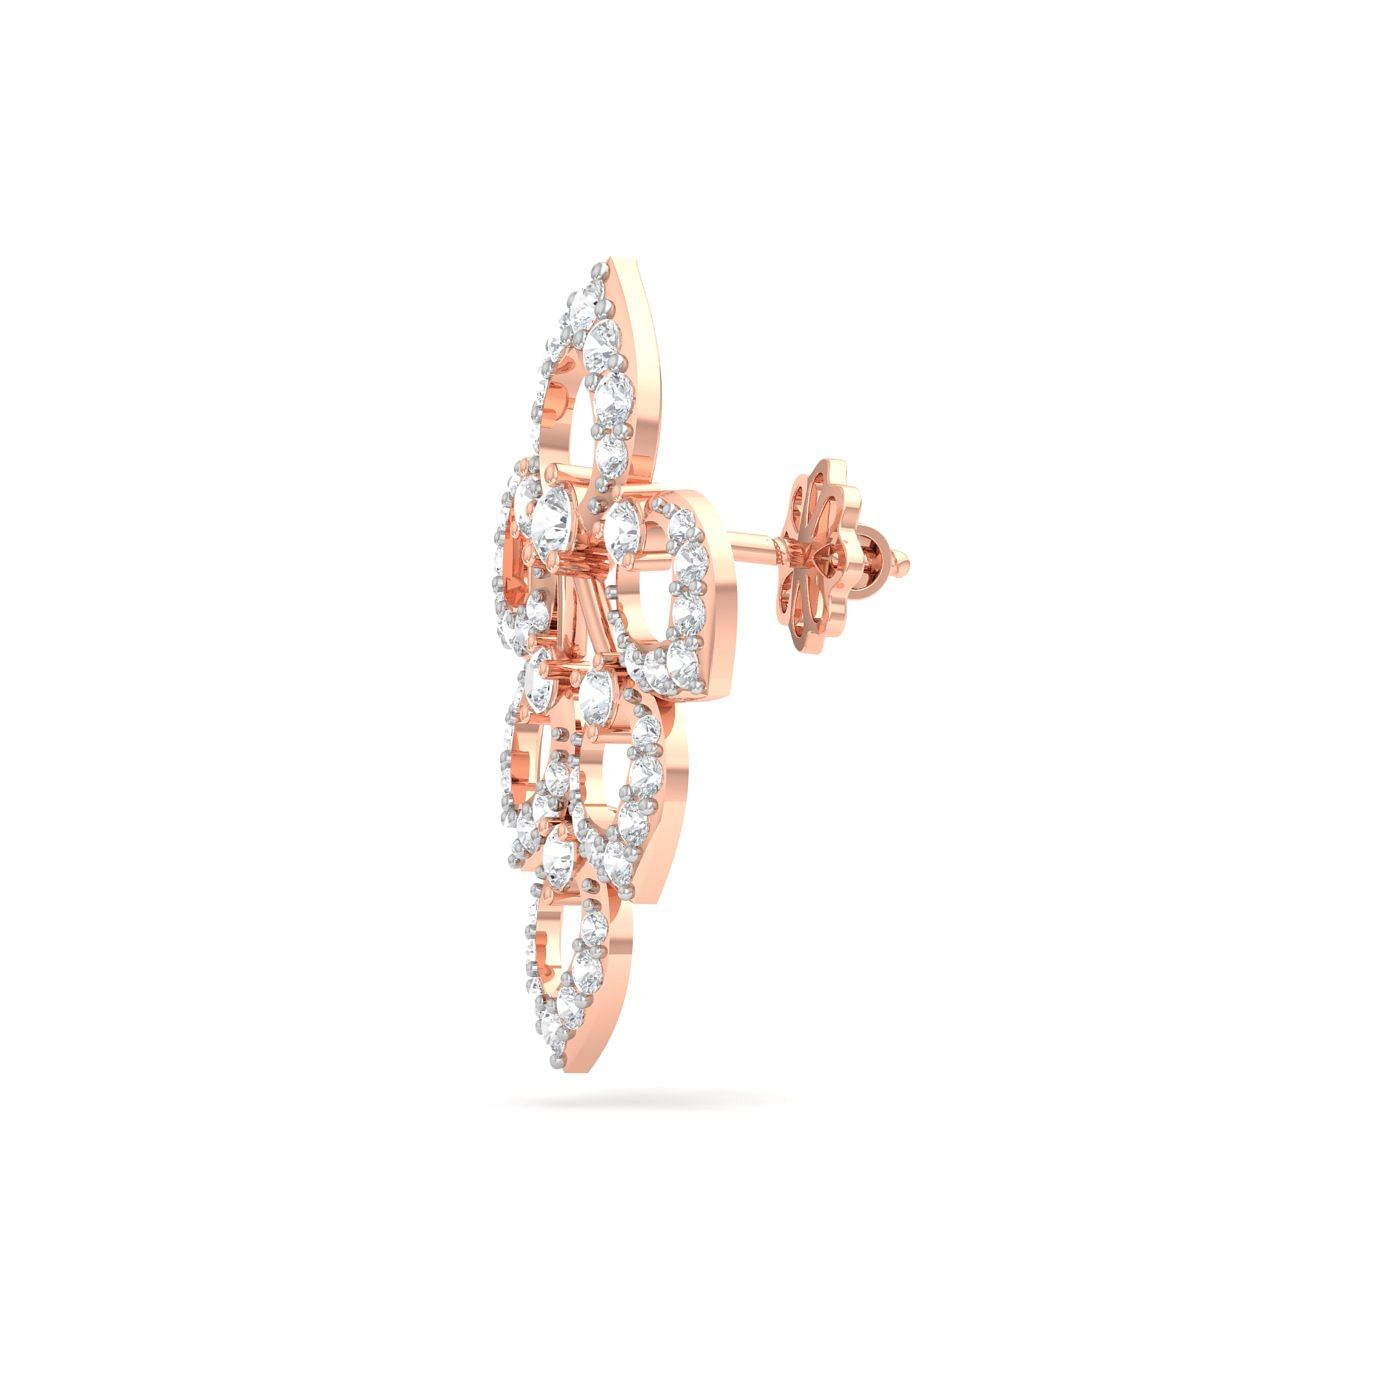 Petals Design Diamond Earring In Rose Gold